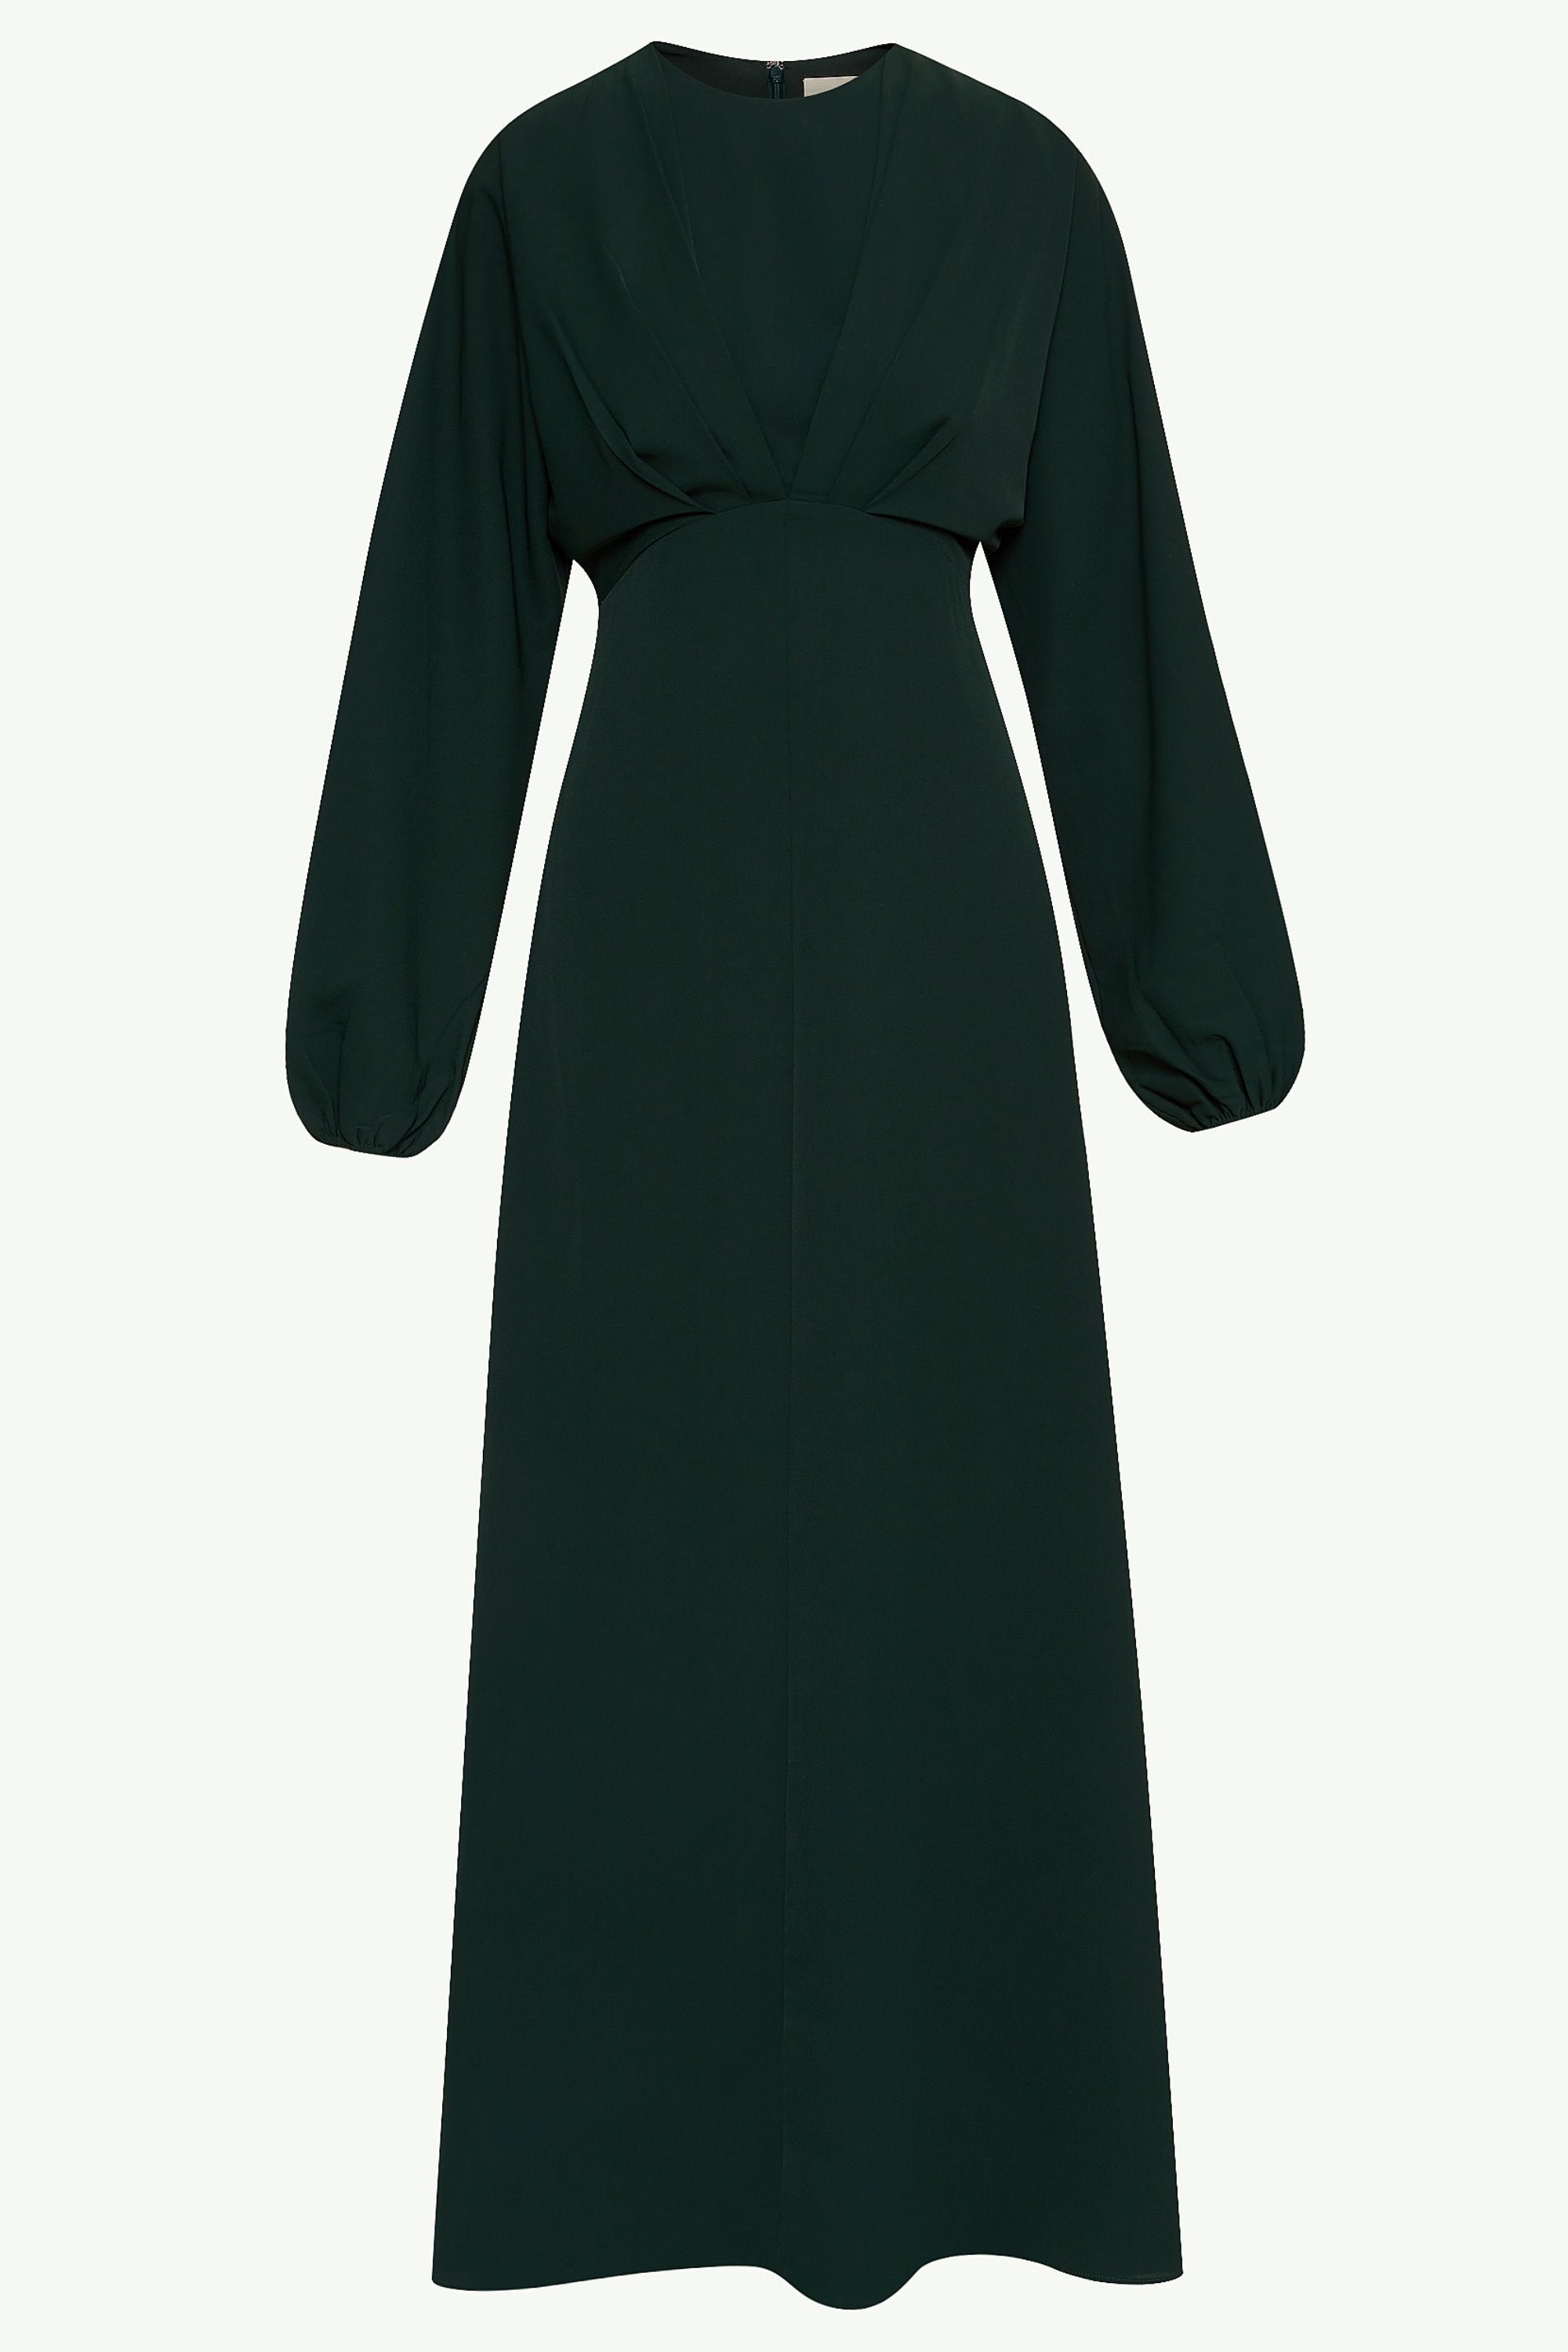 Karina Dolman Sleeve Maxi Dress - Emerald Clothing Veiled 